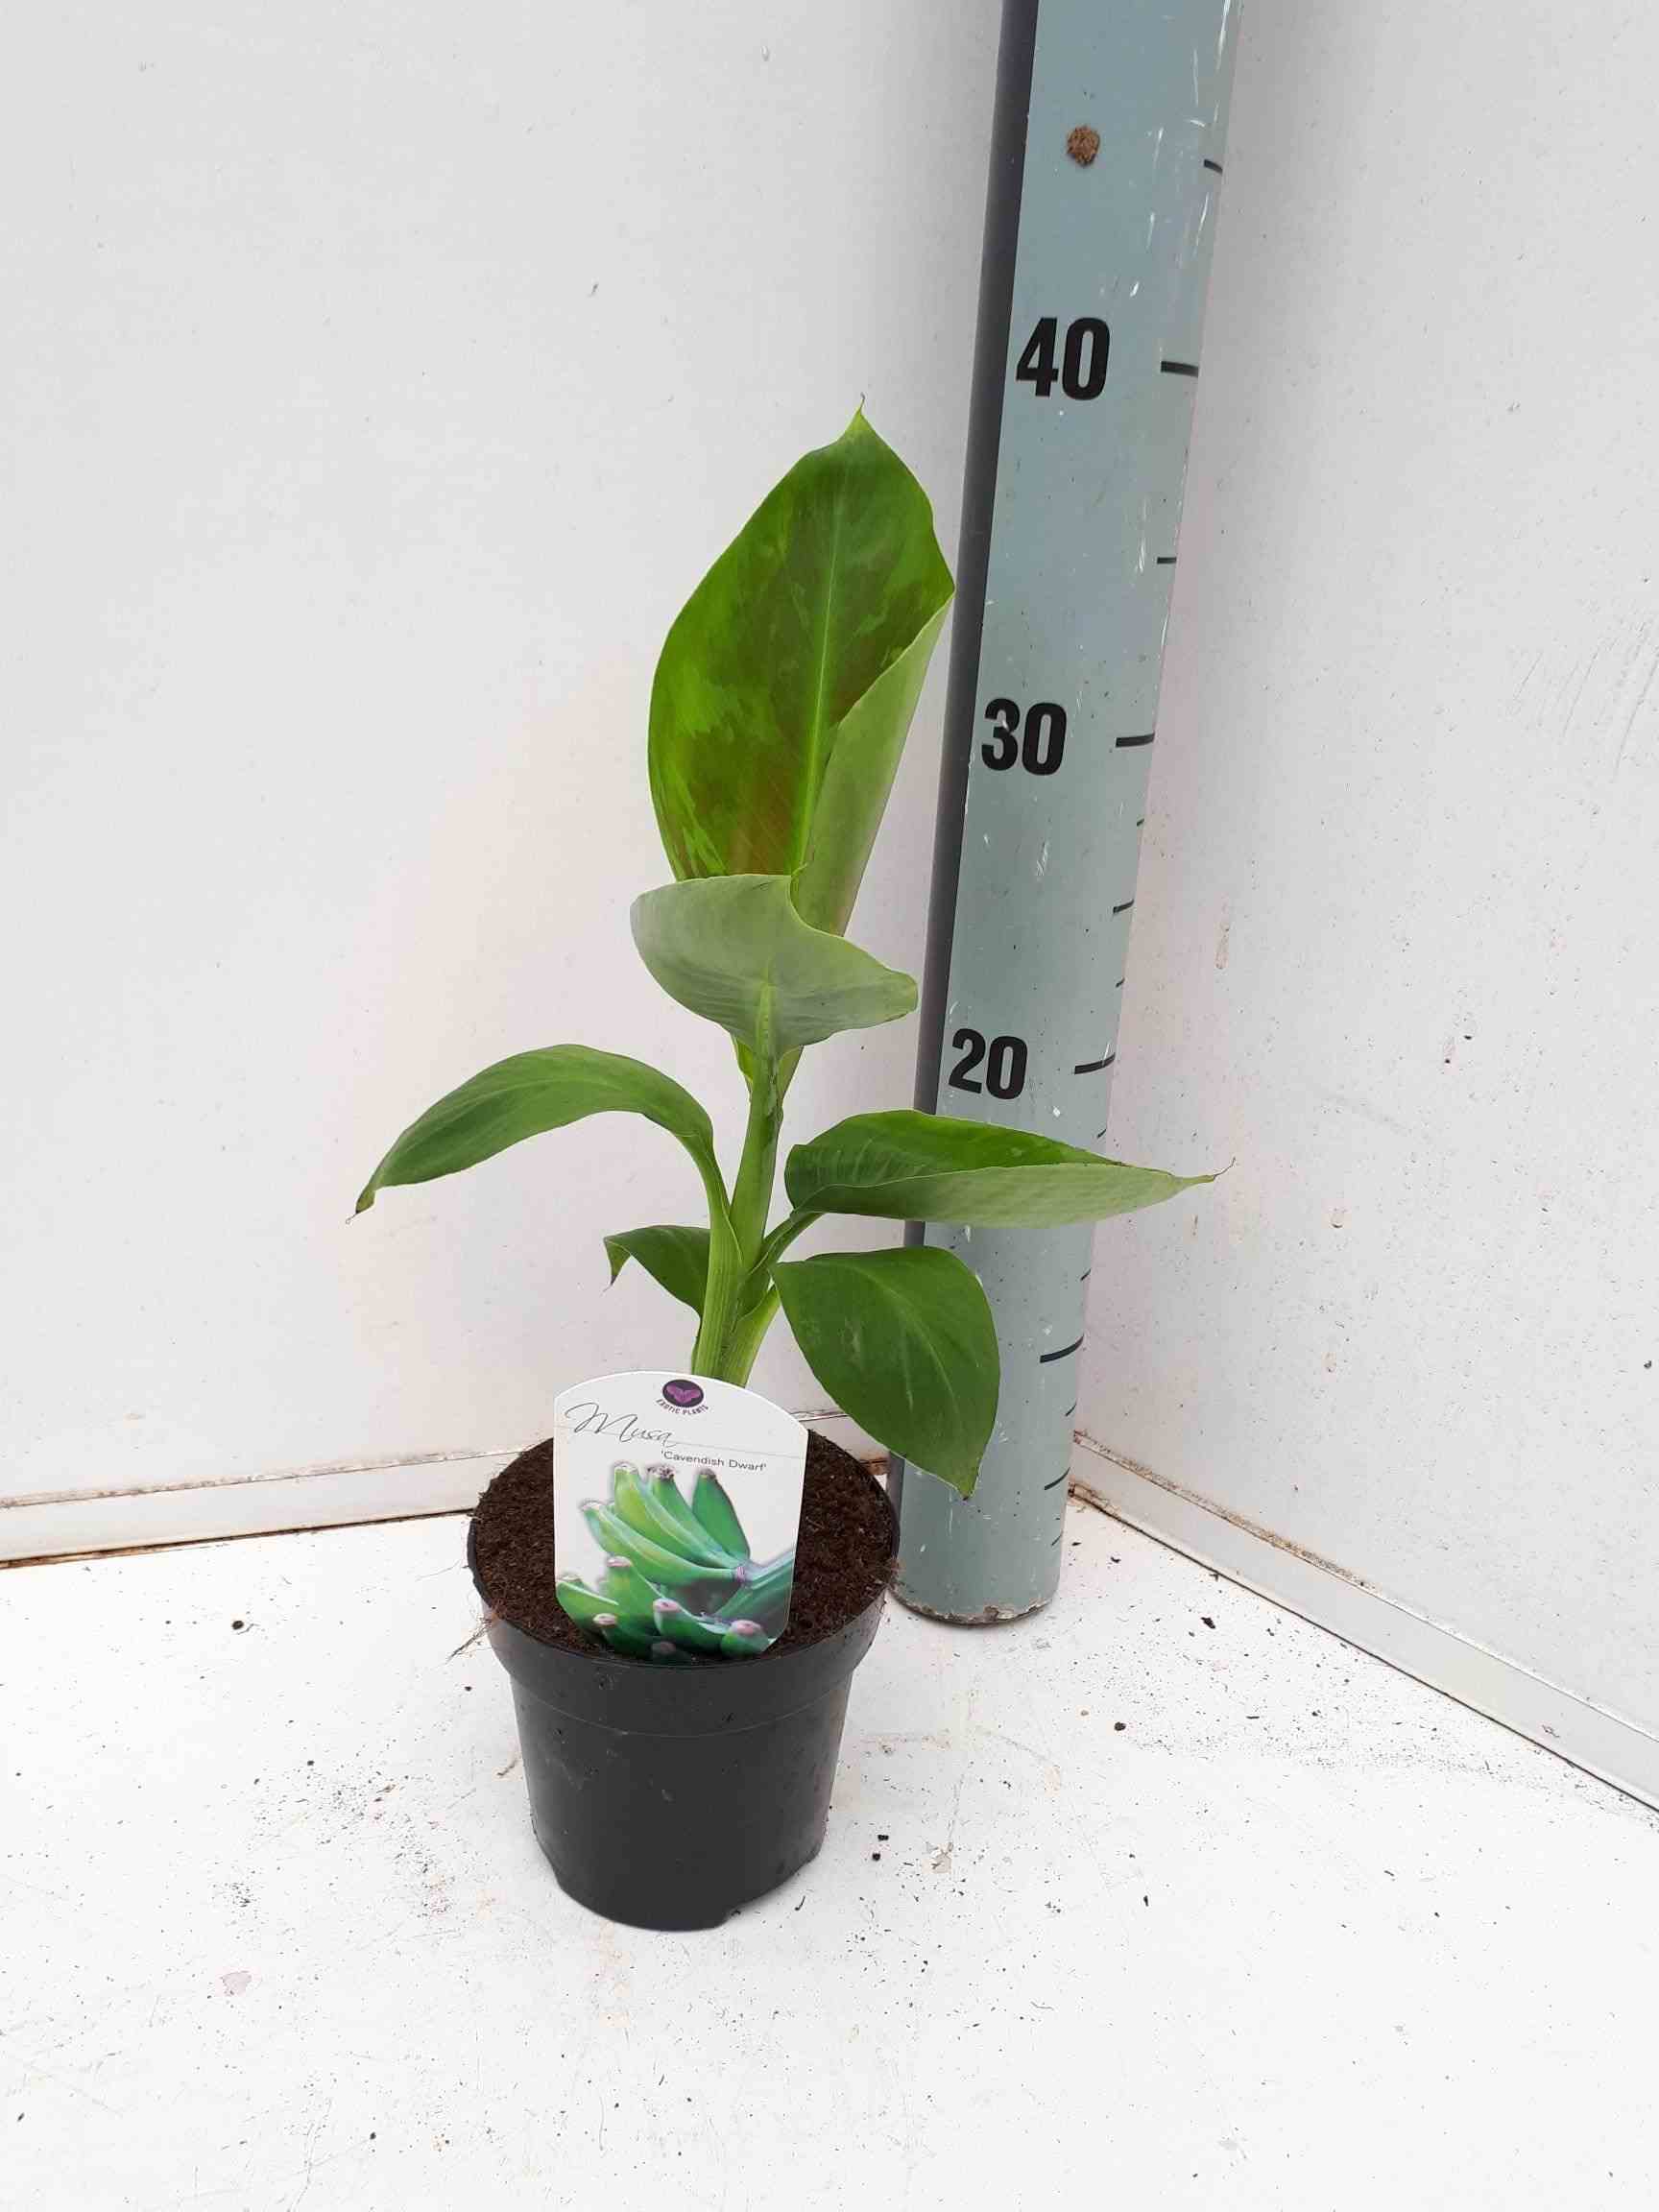 Bananier musa acuminata cv. Super dwarf cavendish   rose - taille pot de 7 litres ? 60/80 cm